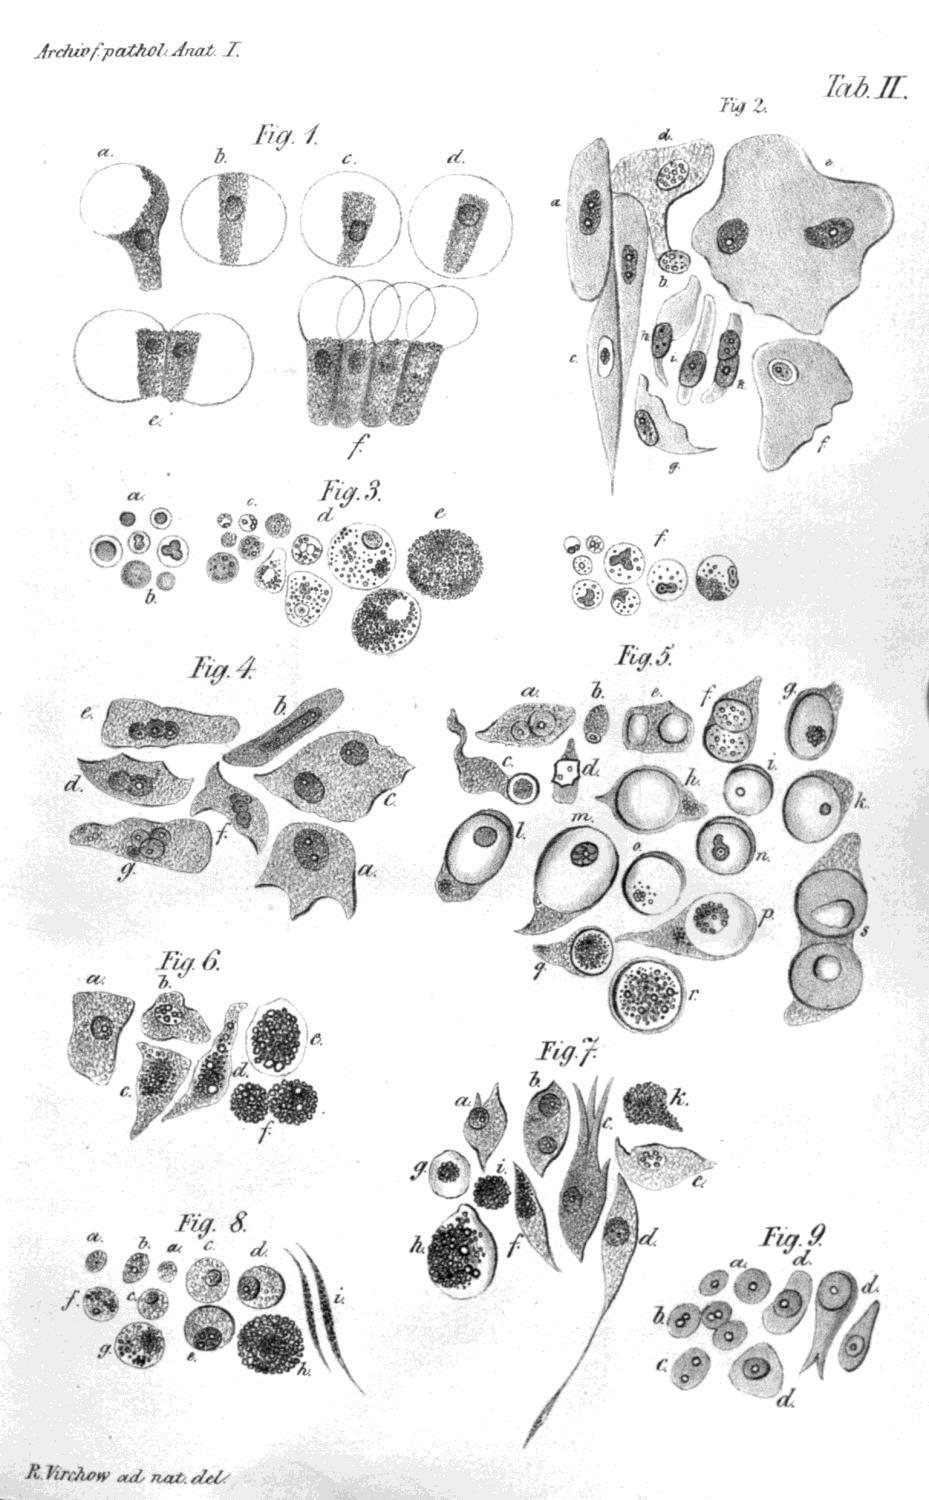 Matthias Schleiden 1838 Botánico Se dedico a observar tejidos vegetales al